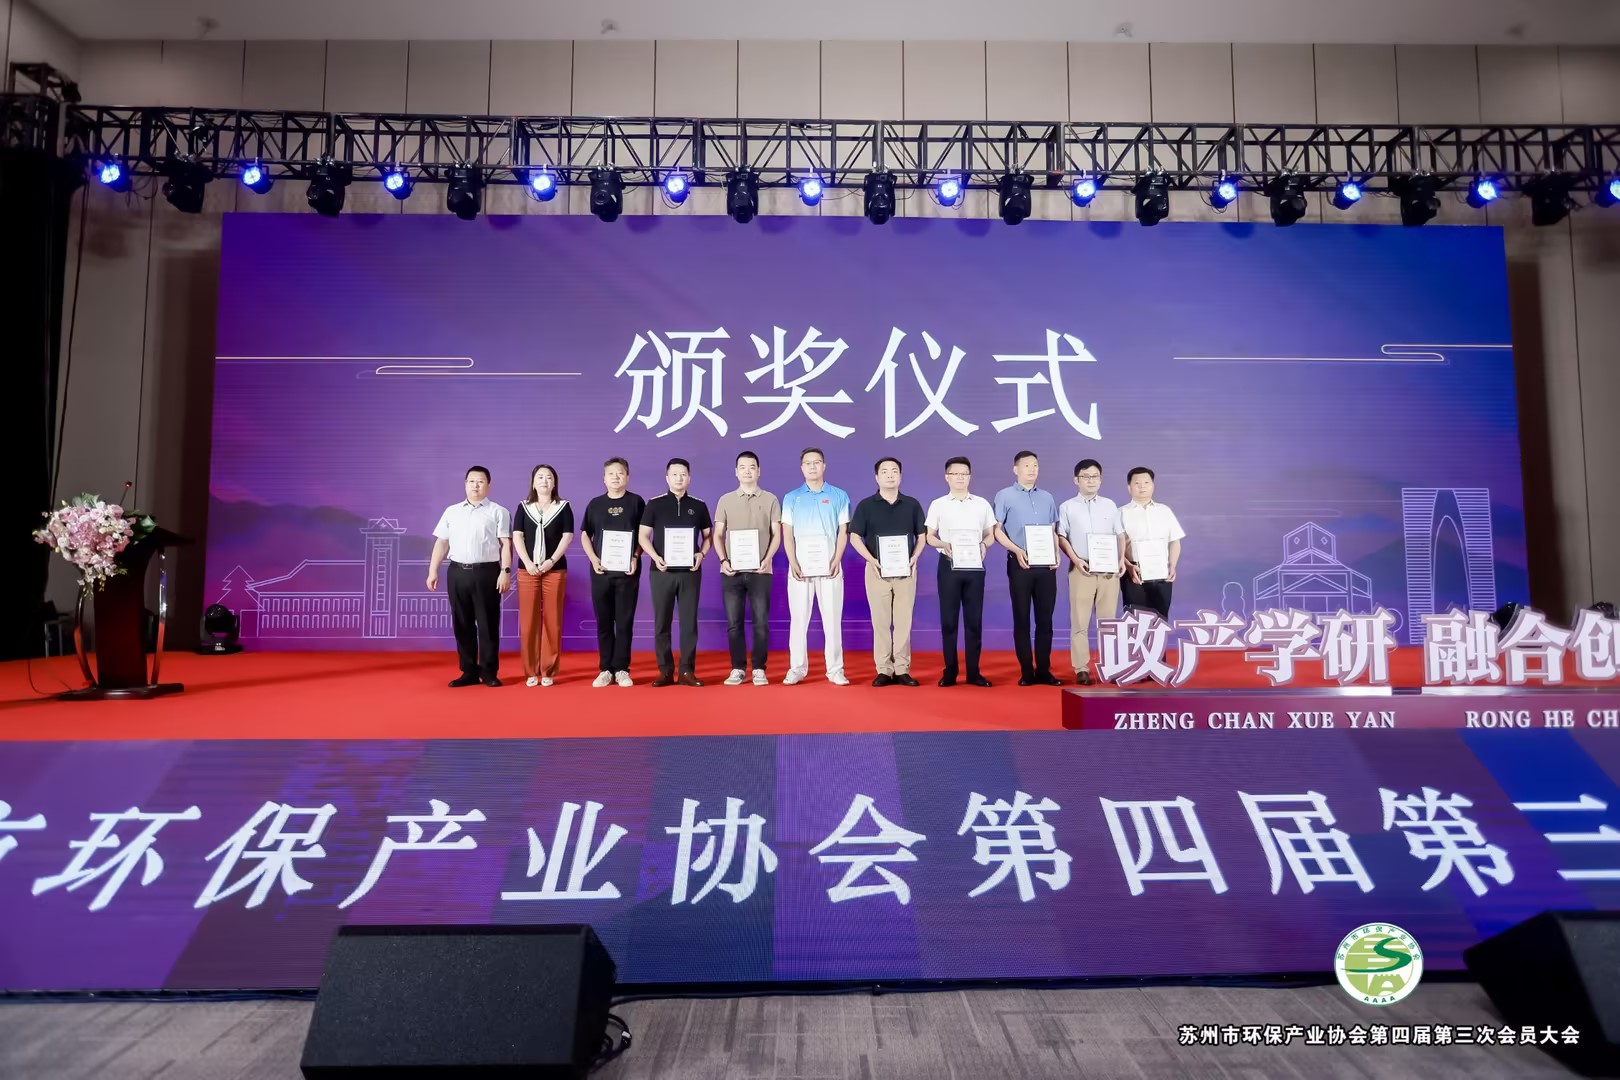 Liding Environmental Protection ได้รับรางวัล Suzhou Environmental Protection Industry Advanced Management Award และตำแหน่งผู้จัดการยอดเยี่ยม